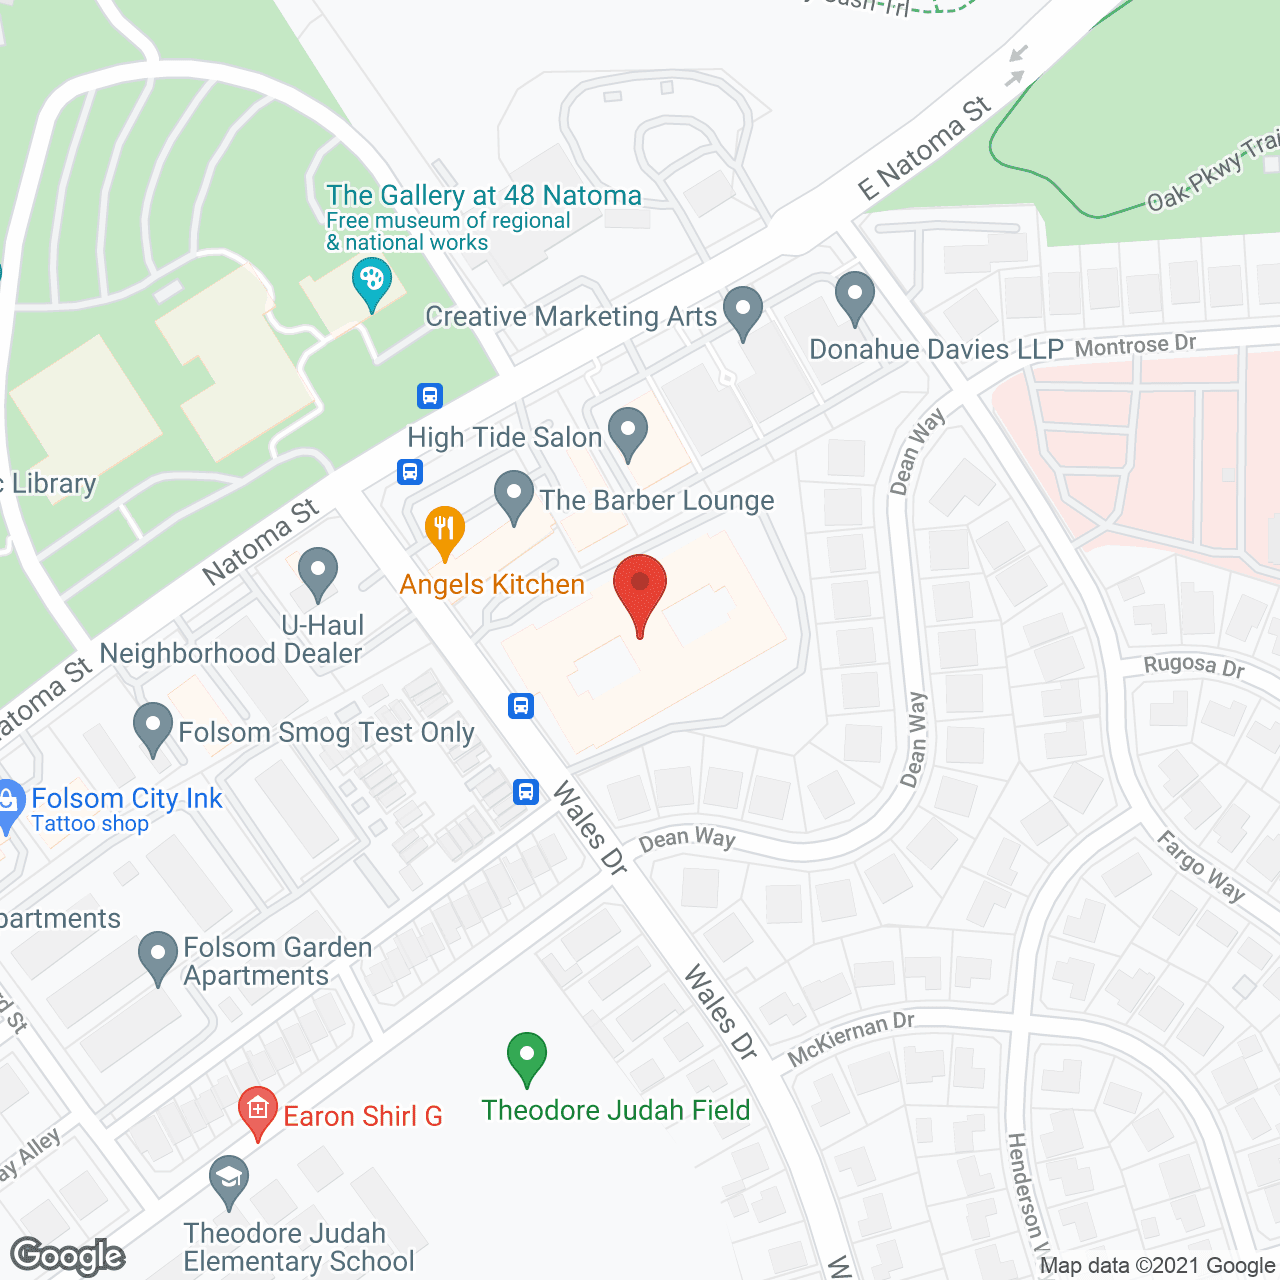 Park Folsom in google map